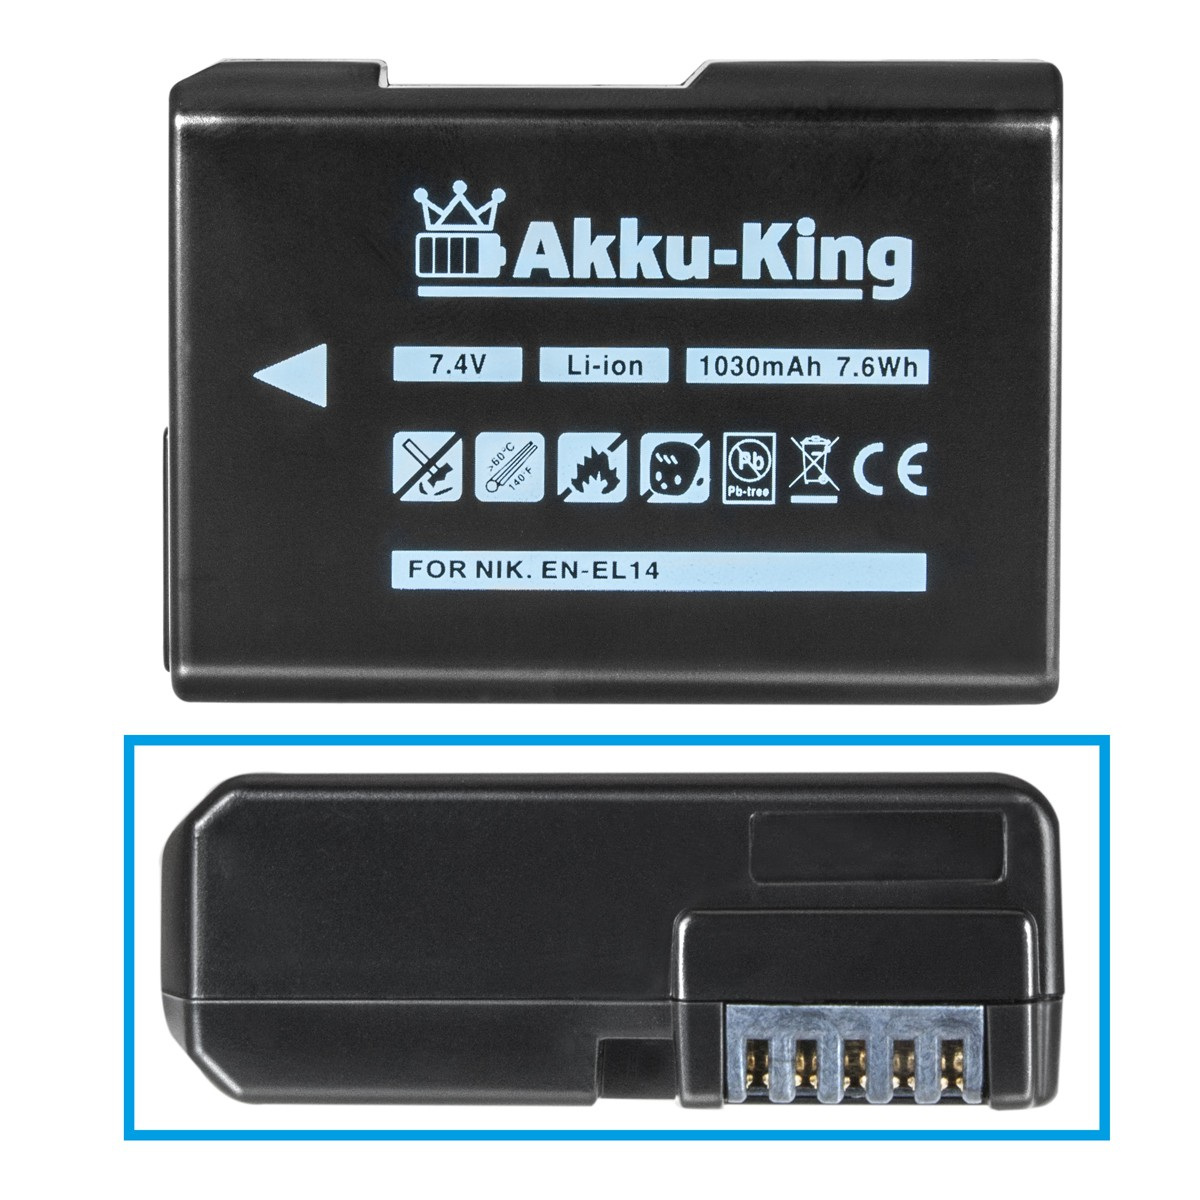 AKKU-KING Akku kompatibel mit Kamera-Akku, Li-Ion 1030mAh EN-EL14 Nikon Volt, 7.4